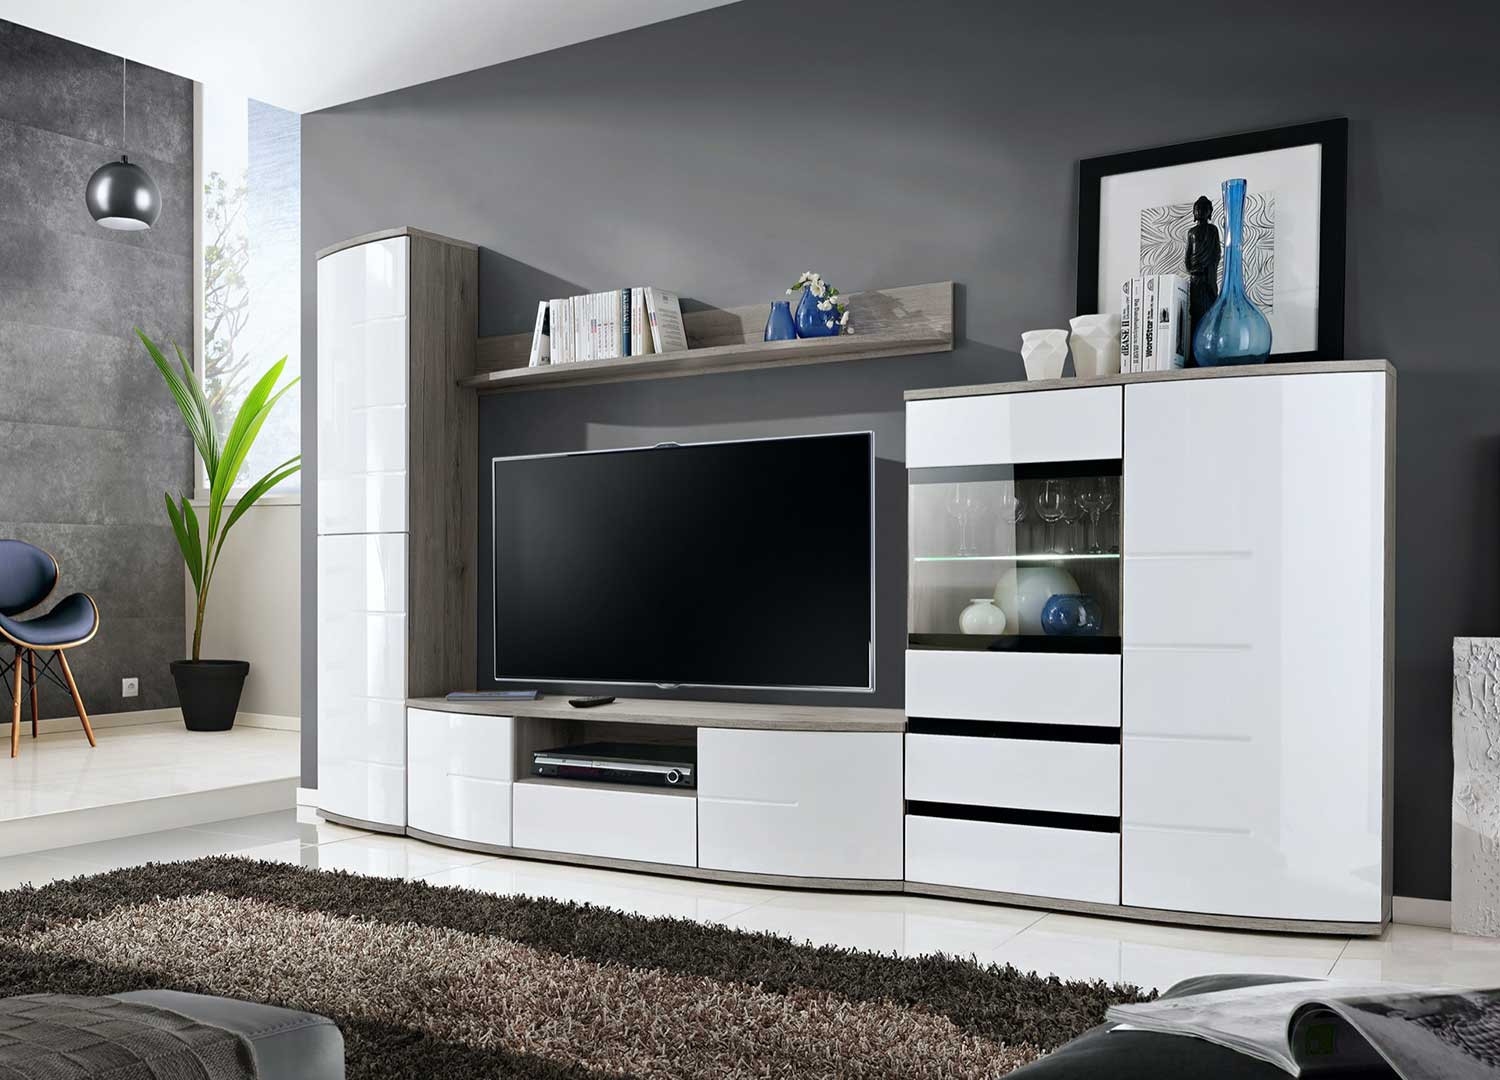 Meuble TV Blanc & Vitrine Murale LED pour salon